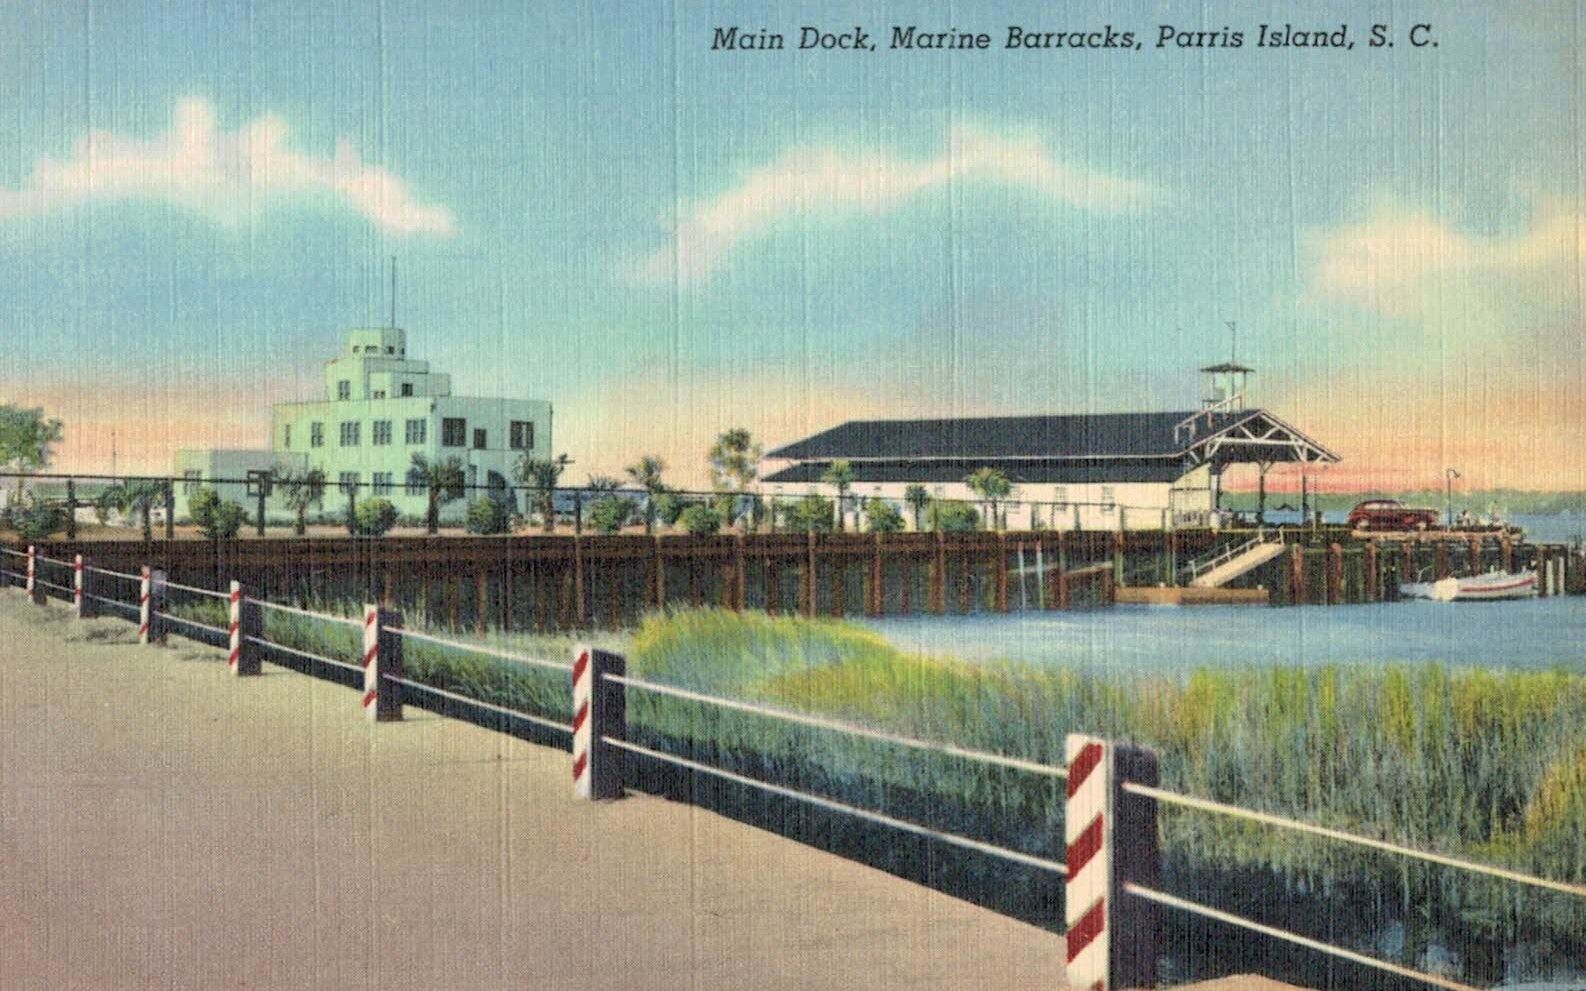 Parris Island,So.Carolina,Marine Barracks,Main Deck,WW II,LInen,U.S.M.C.,c.1940s